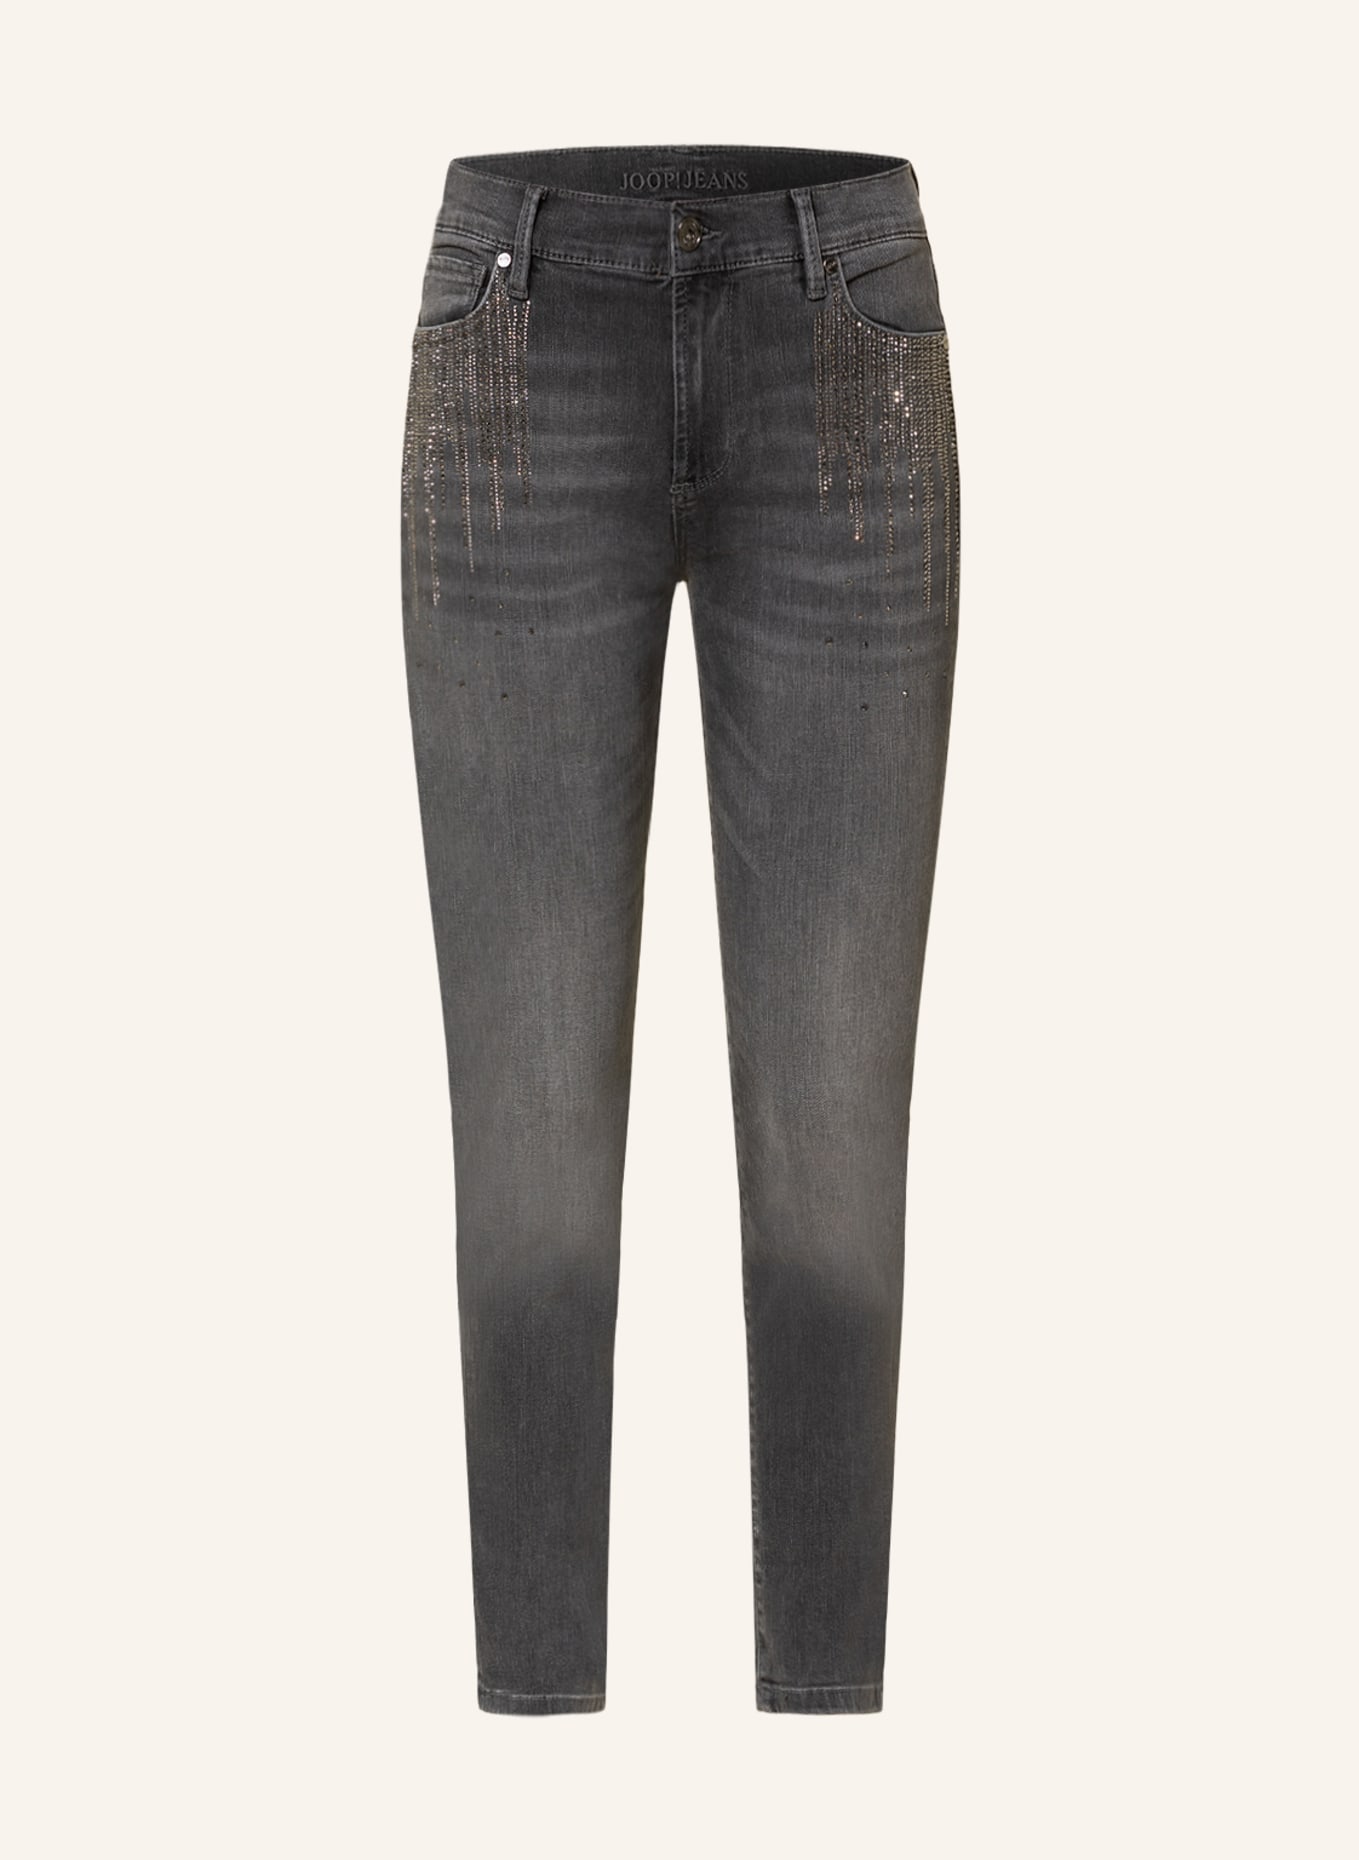 JOOP! Skinny jeans with decorative gems, Color: 030 Medium Grey                030 (Image 1)